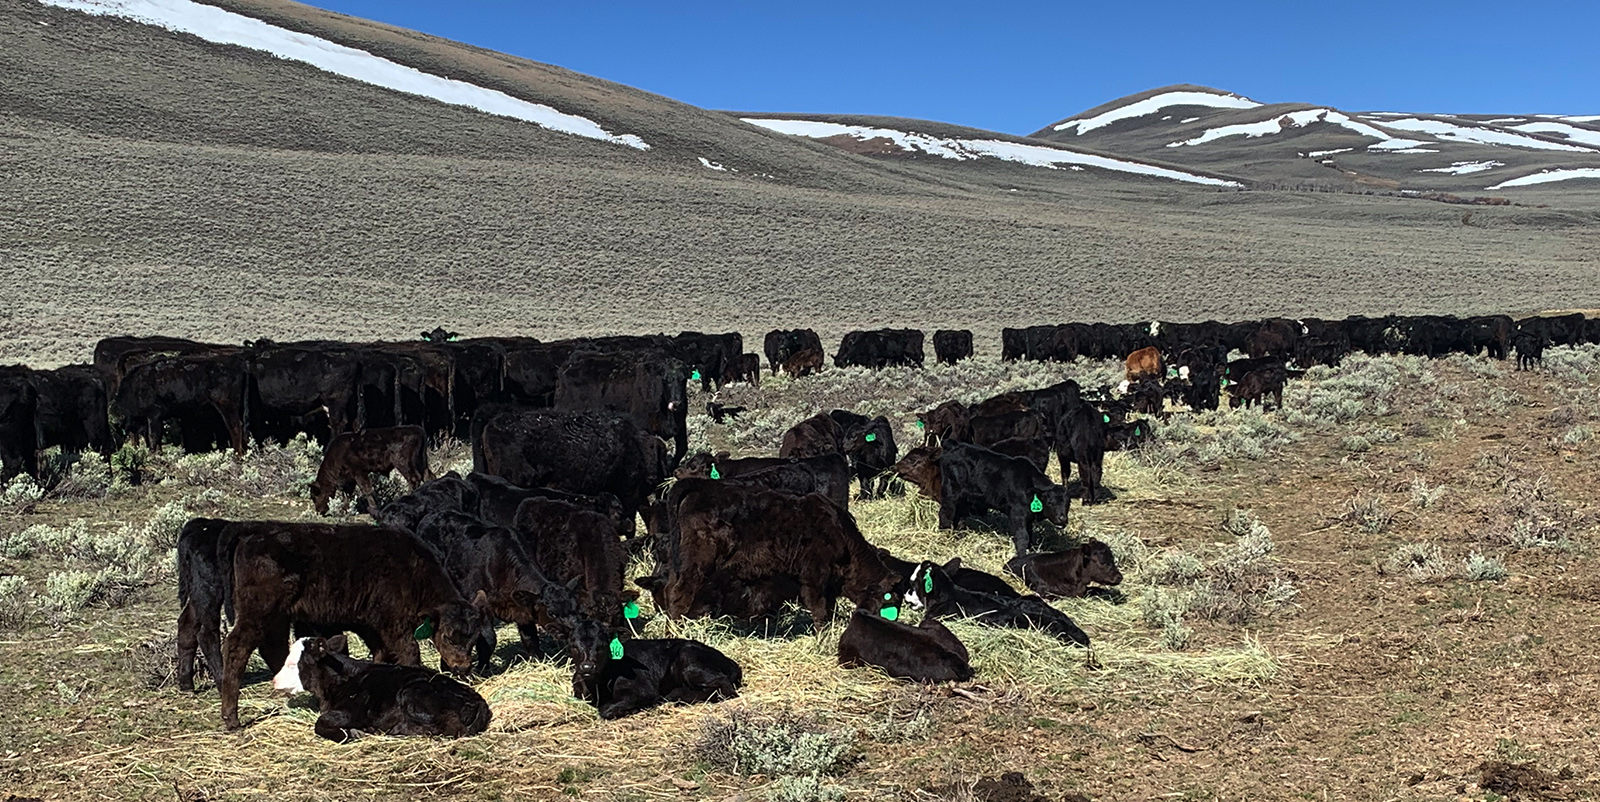 Cows in an open plain 